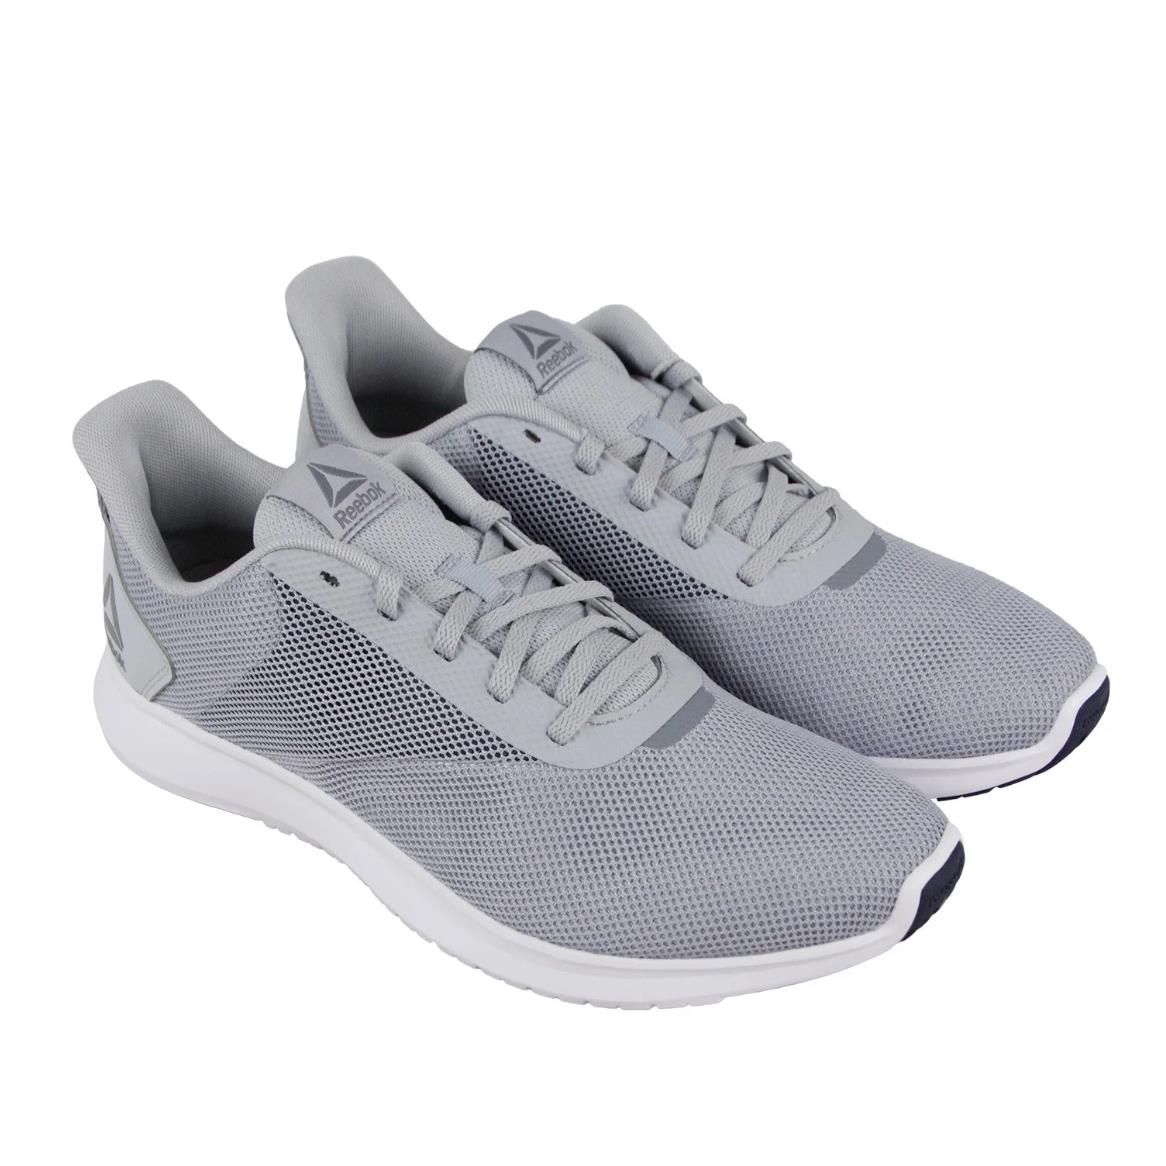 Mens Shoes - Reebok Instalite Lux - Grey - Size 9